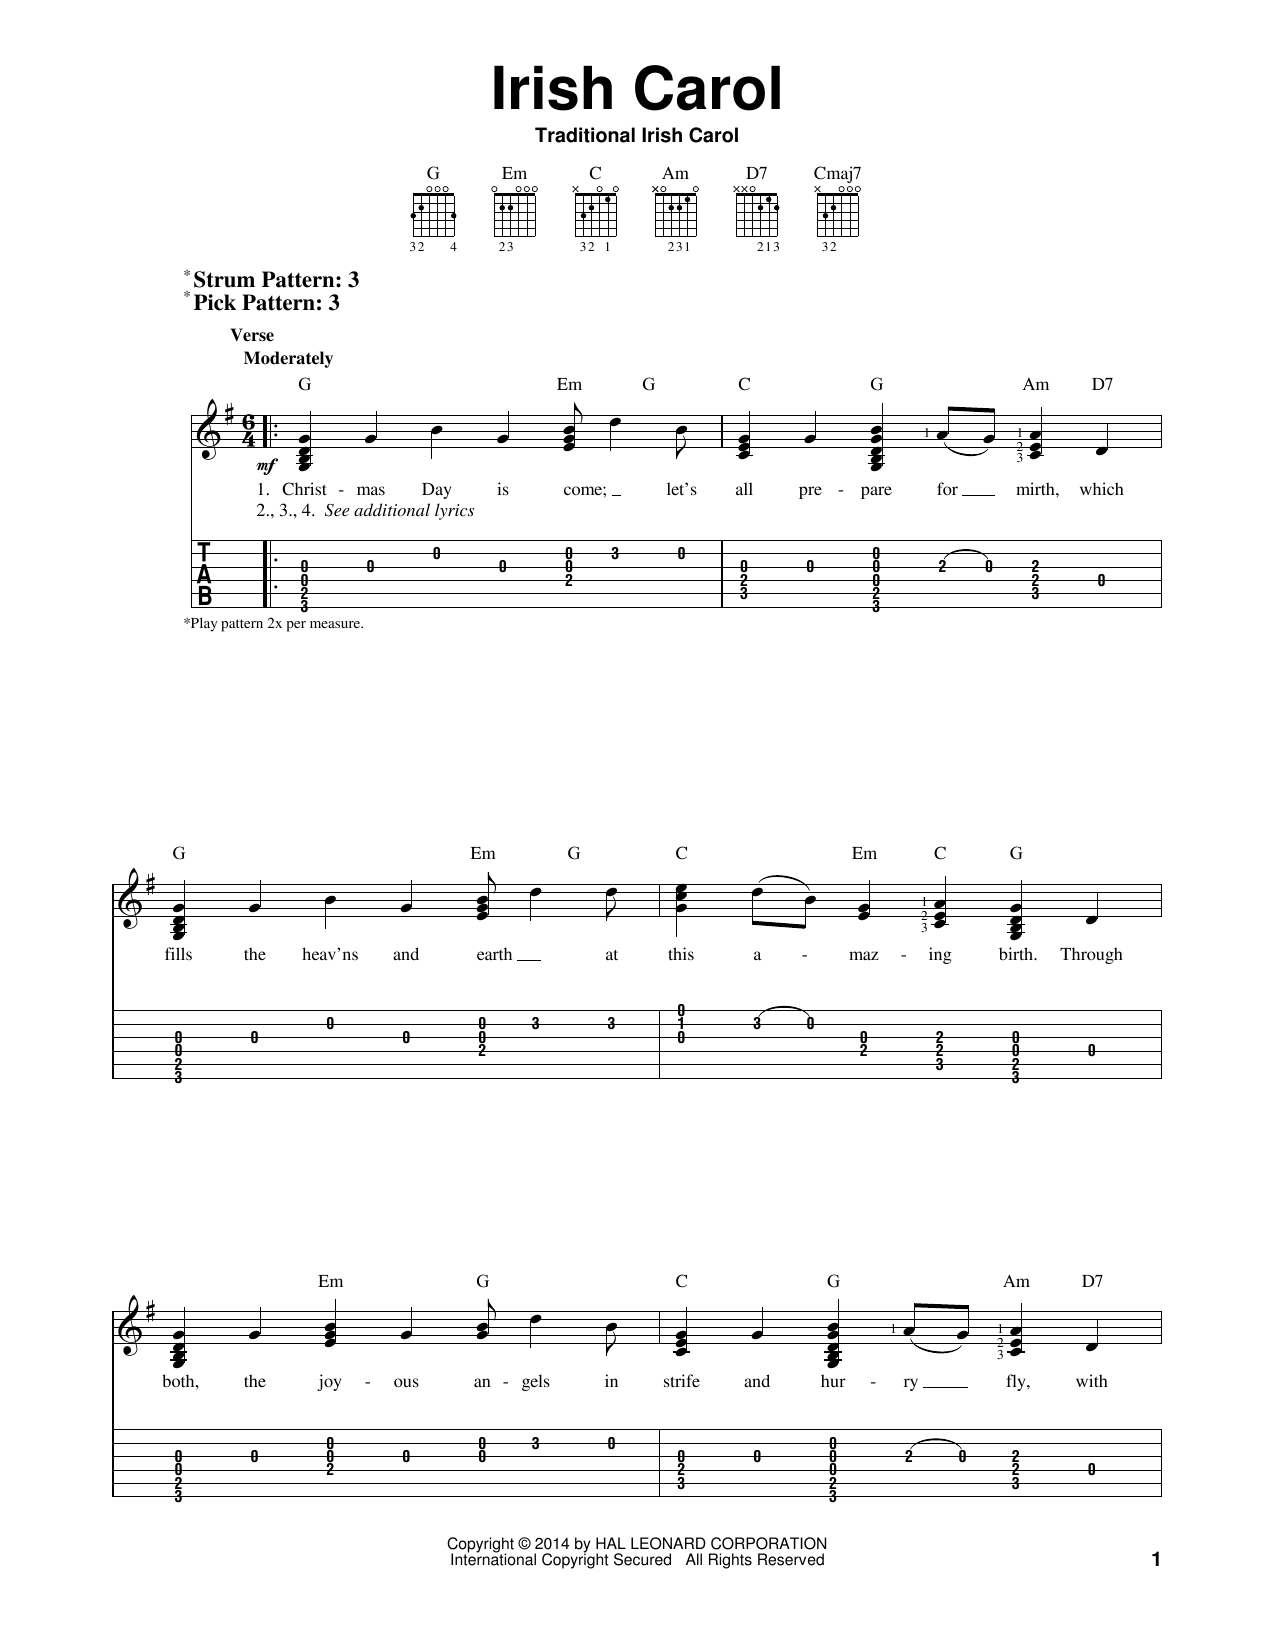 Traditional Irish Carol Irish Carol Sheet Music Notes & Chords for Easy Guitar Tab - Download or Print PDF